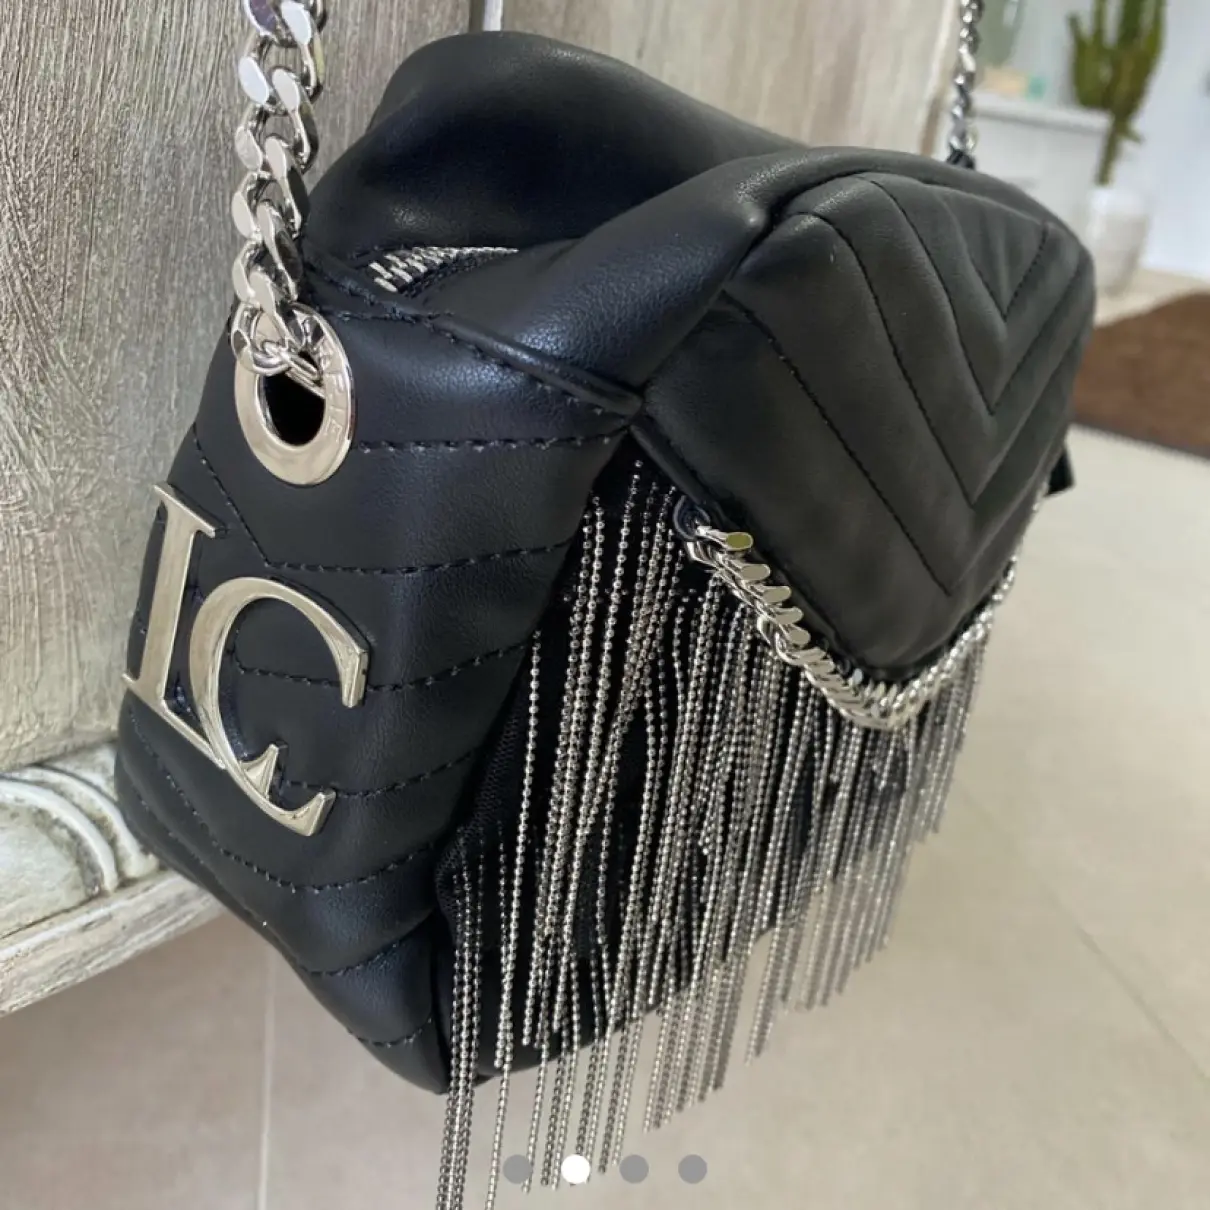 Buy La carrie Leather handbag online